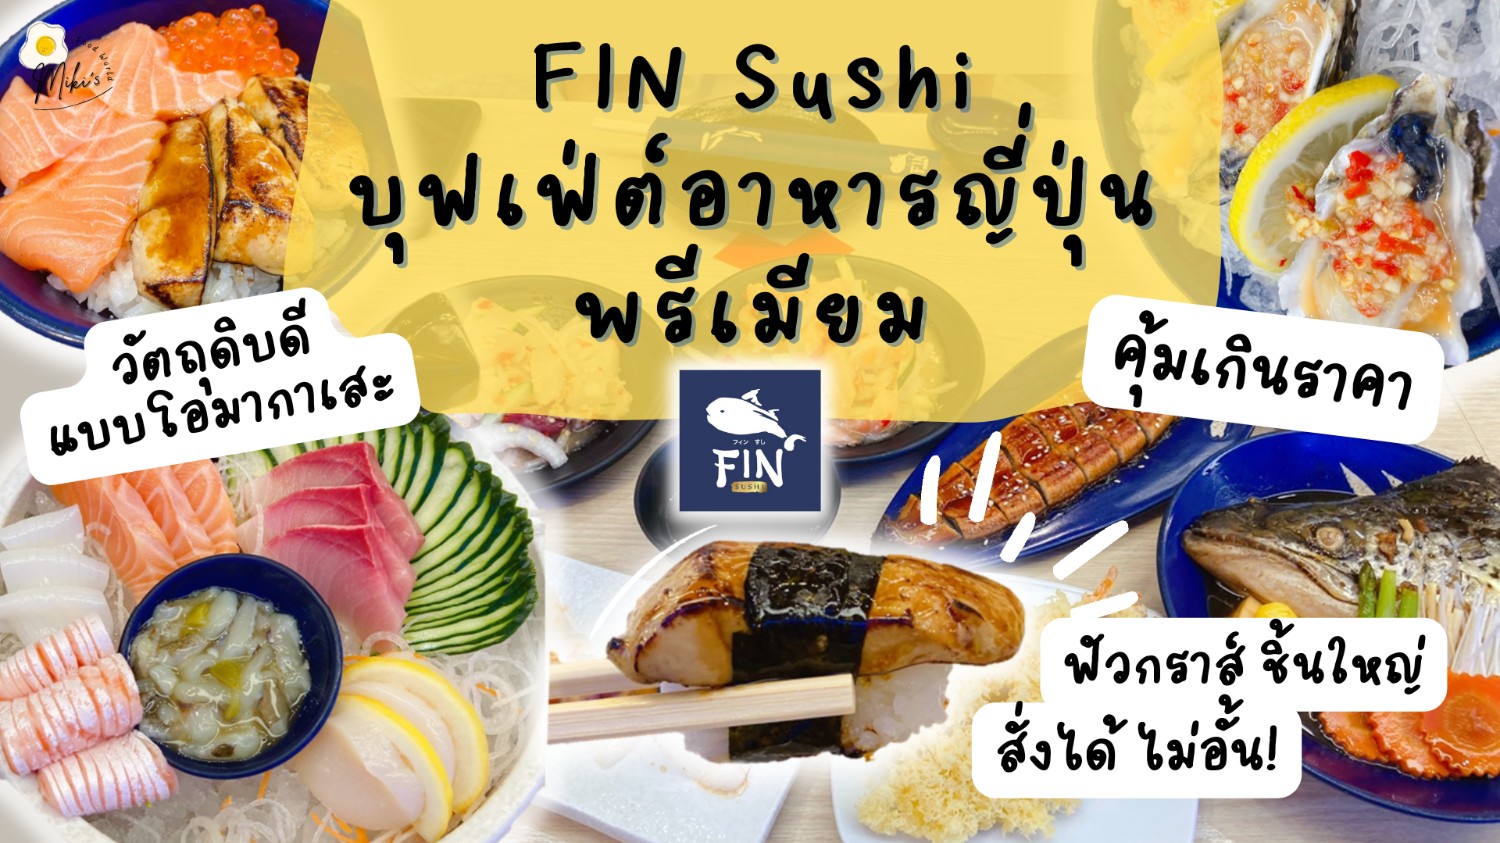 [CR] รีวิว บุฟเฟ่ต์ญี่ปุ่น FIN Sushi วัตถุดิบพรีเมียม อร่อยเกินราคา สั่งฟัวกราส์ได้ไม่อั้น pantip